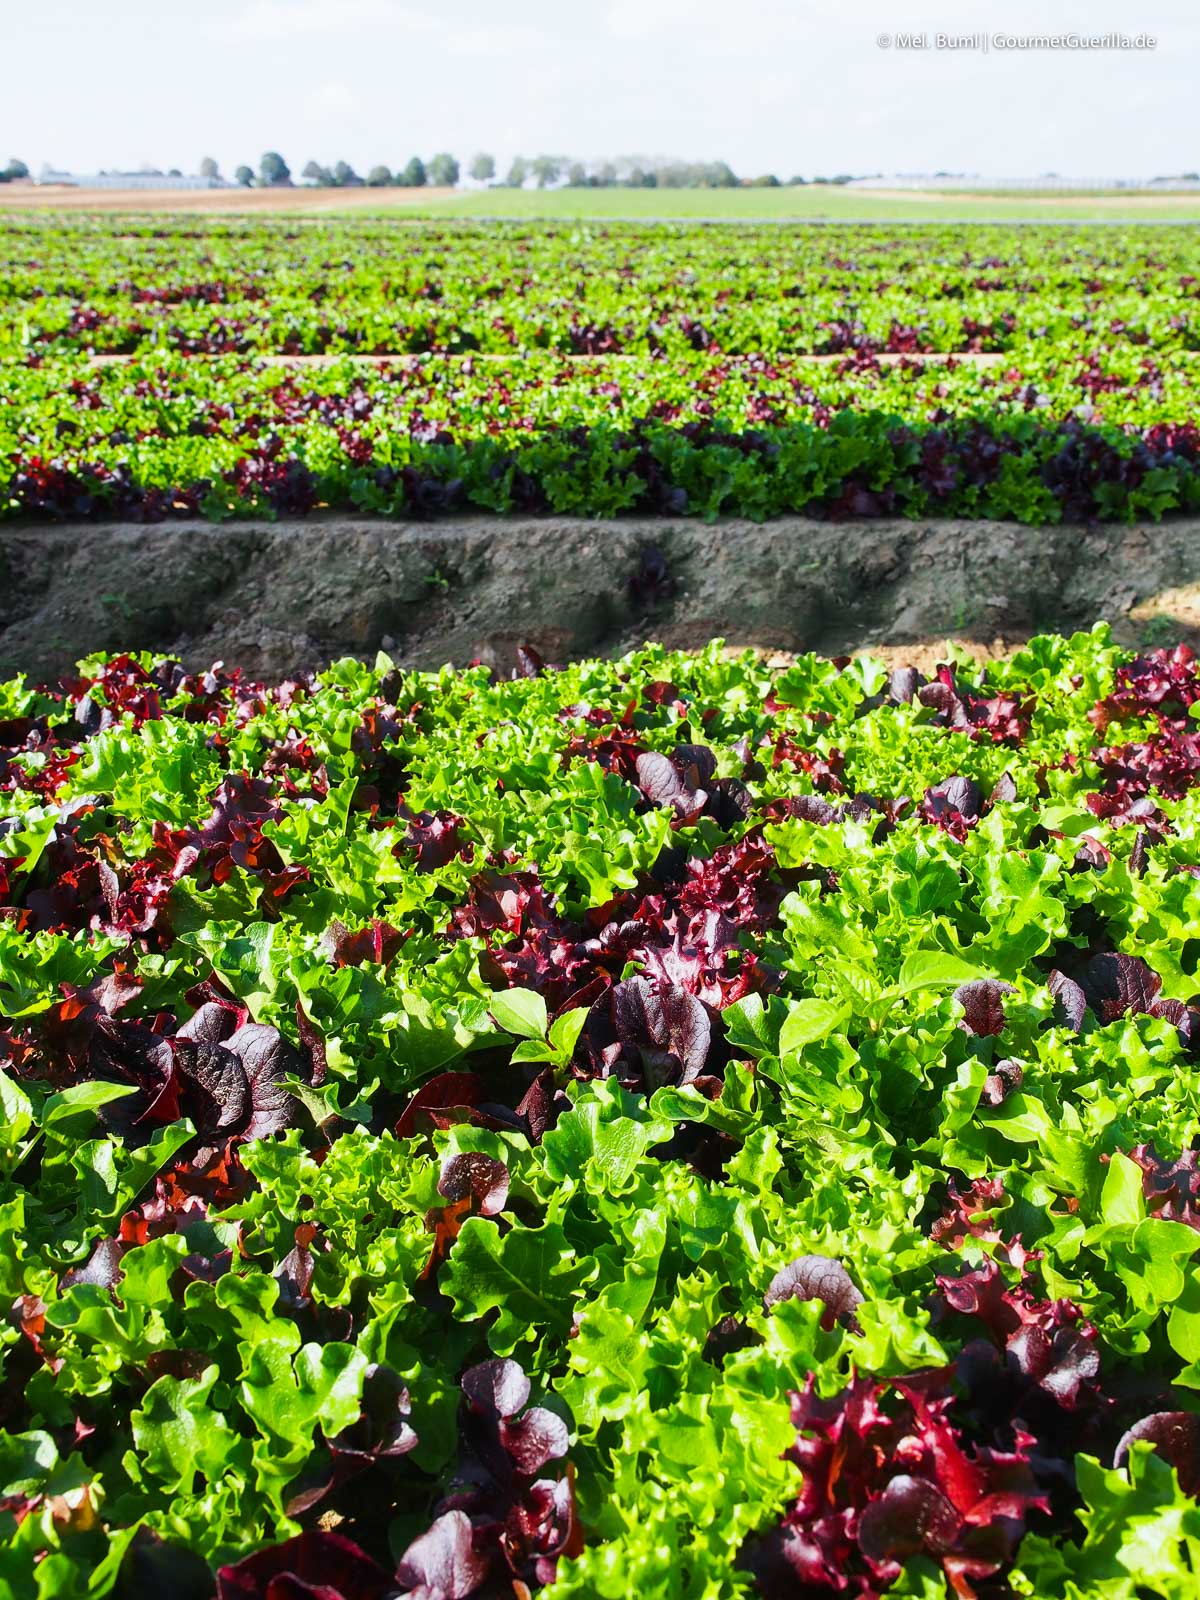 Salatmischung auf dem Feld Eisbergsalat auf dem Feld Bonduelle Academy Salat Anbau und Verarbeitung | GourmetGuerilla.de